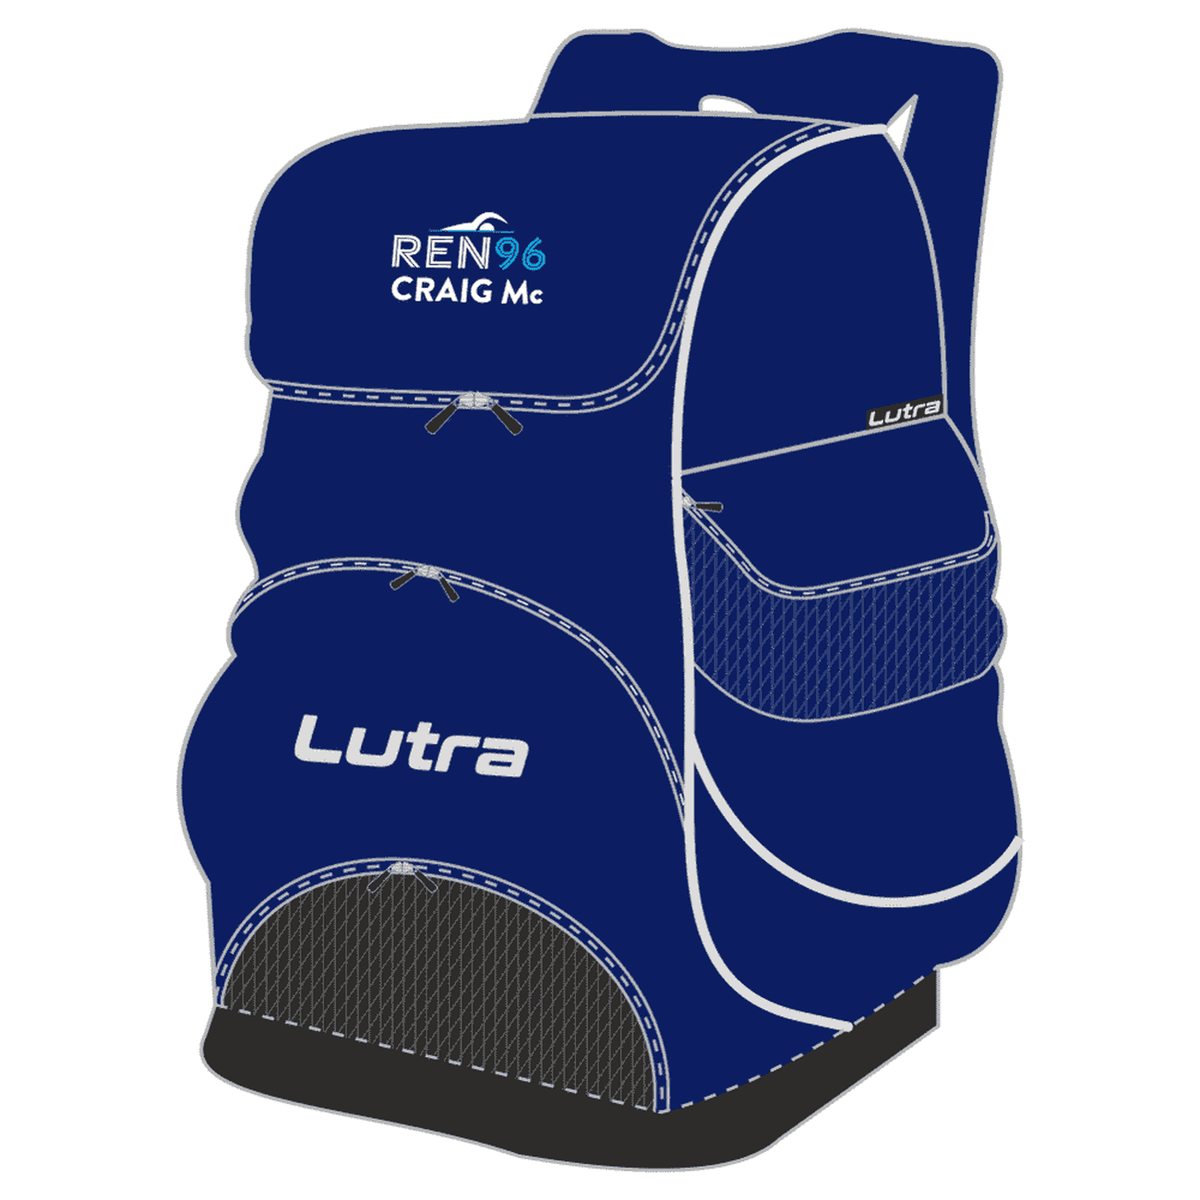 REN96 Swim Team - Lutra Premium Team Backpack 45 litre - Navy